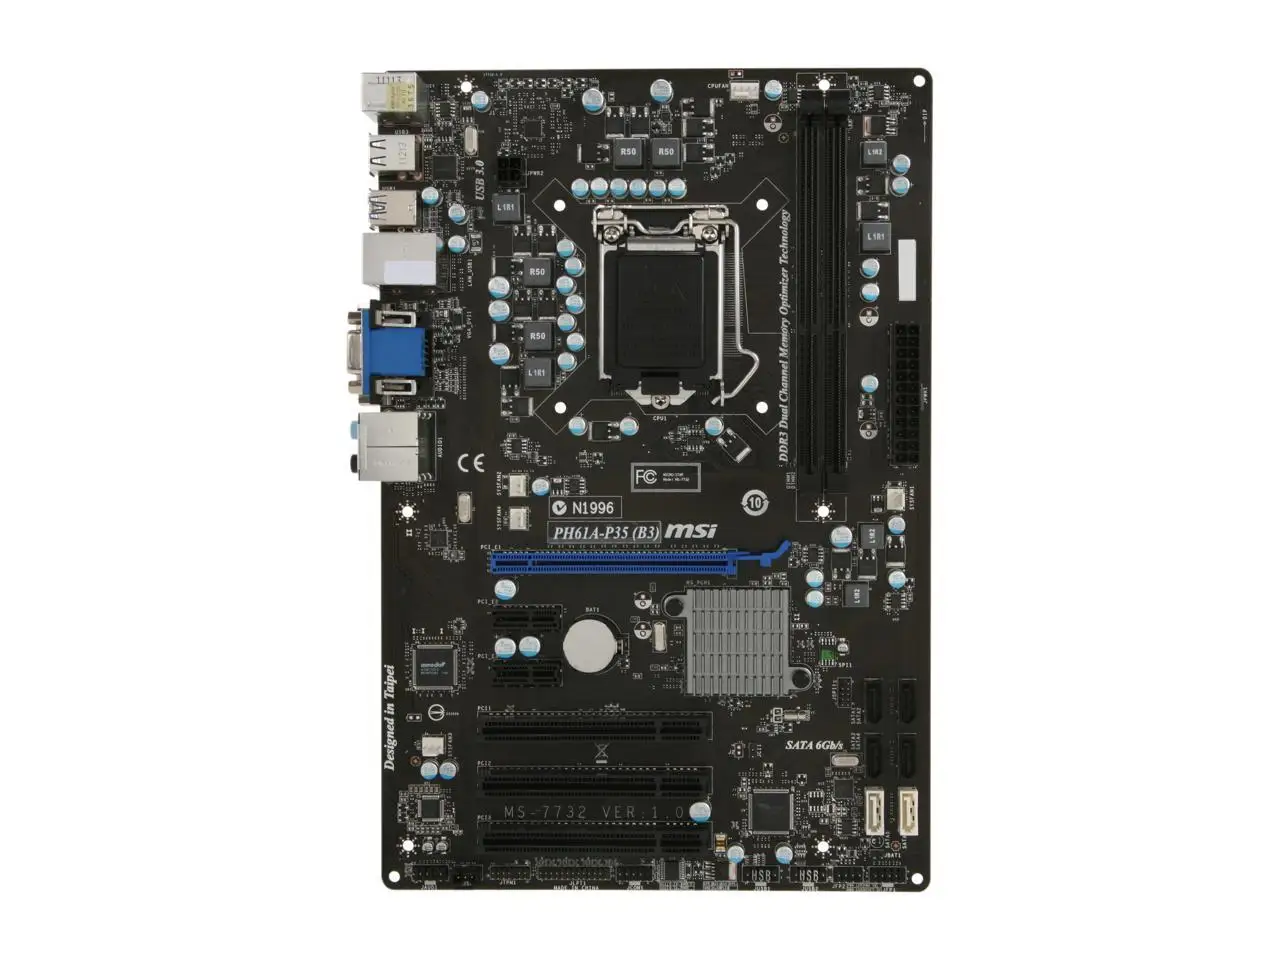 

MSI Intel H61 PH61A-P35 (B3) Motherboard 1155 Motherboard DDR3 SATA 6Gb/s VGA USB3.0 ATX PCI-E X16 UEFI BIOS Core i3 i5 i7 Cpus